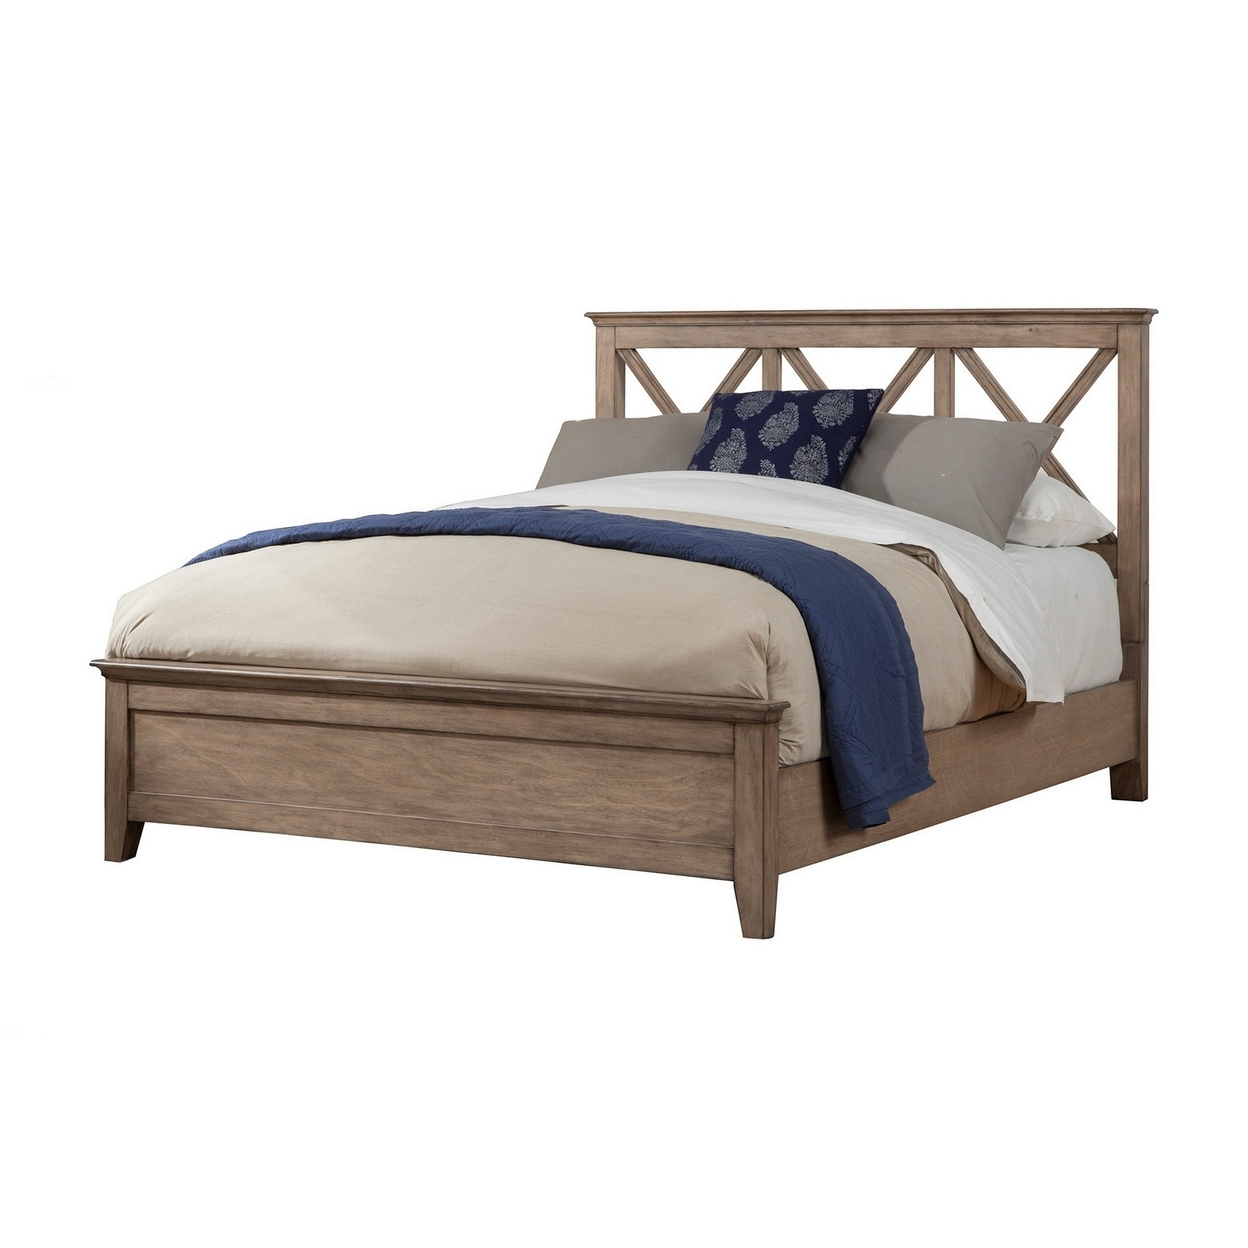 Pixi Full Size Panel Bed, Natural Brown Mahogany, Crossbuck Headboard - Saltoro Sherpi